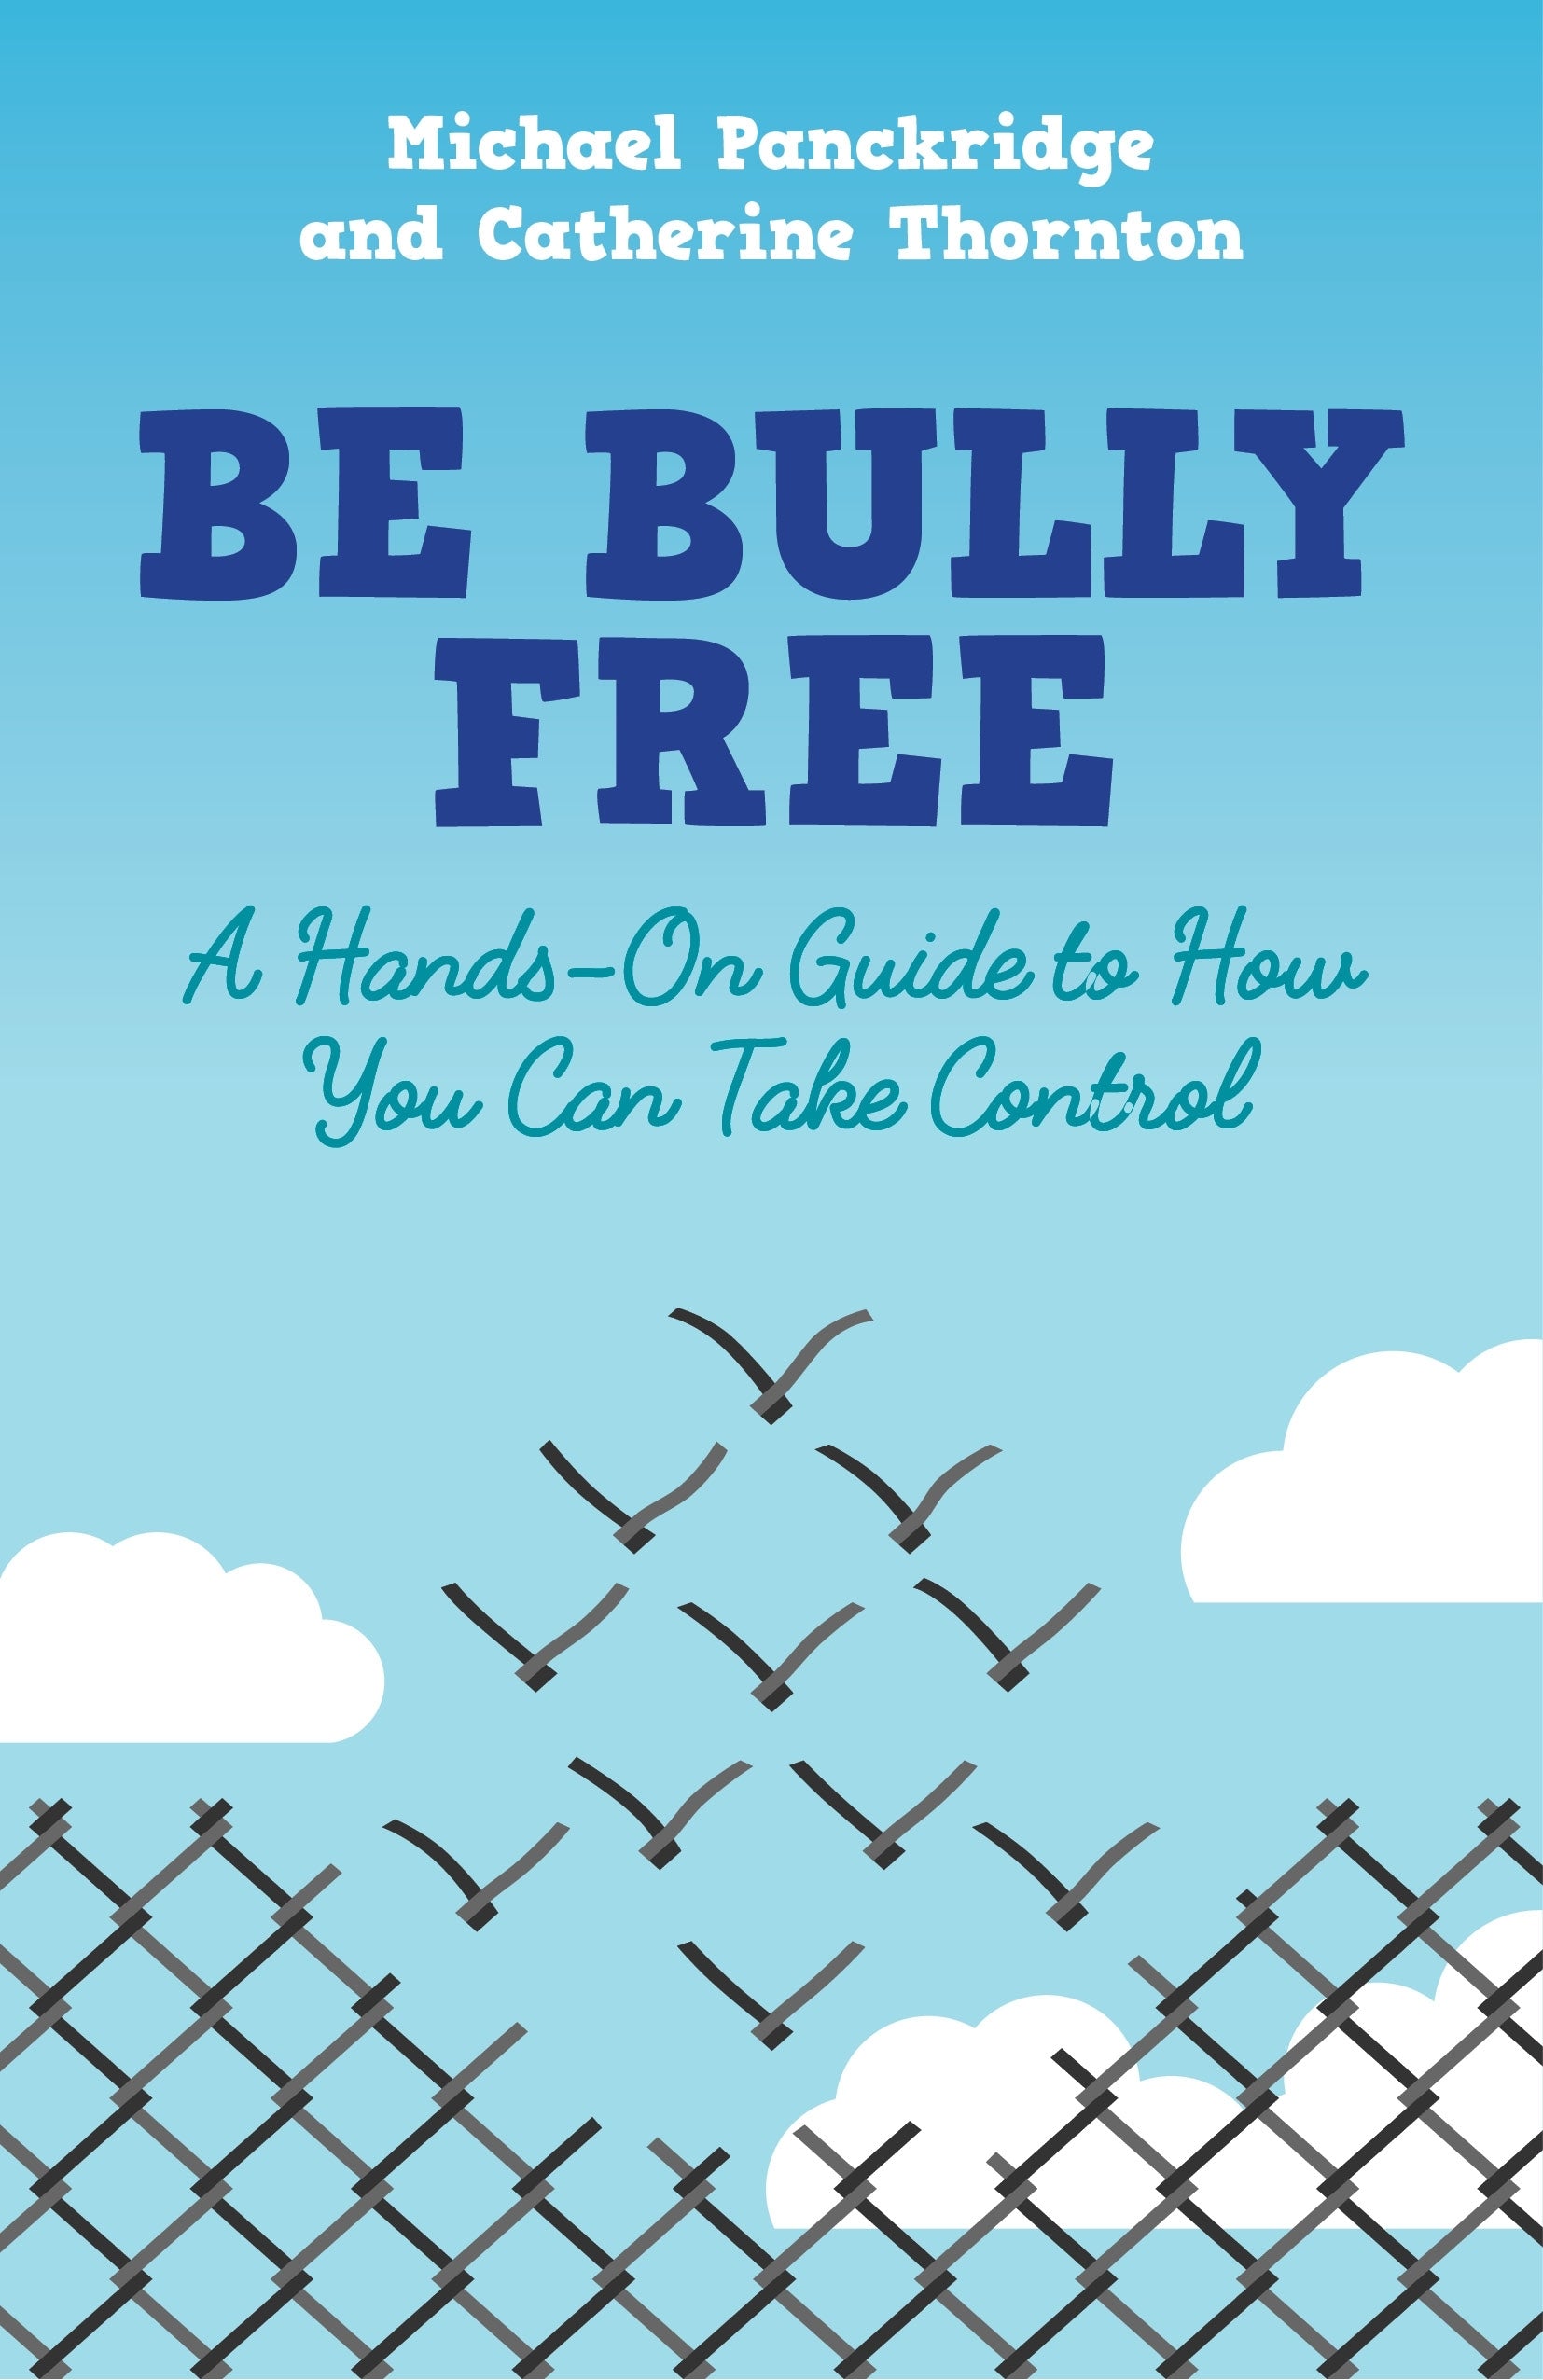 Be Bully Free by Michael Panckridge, Catherine Thornton